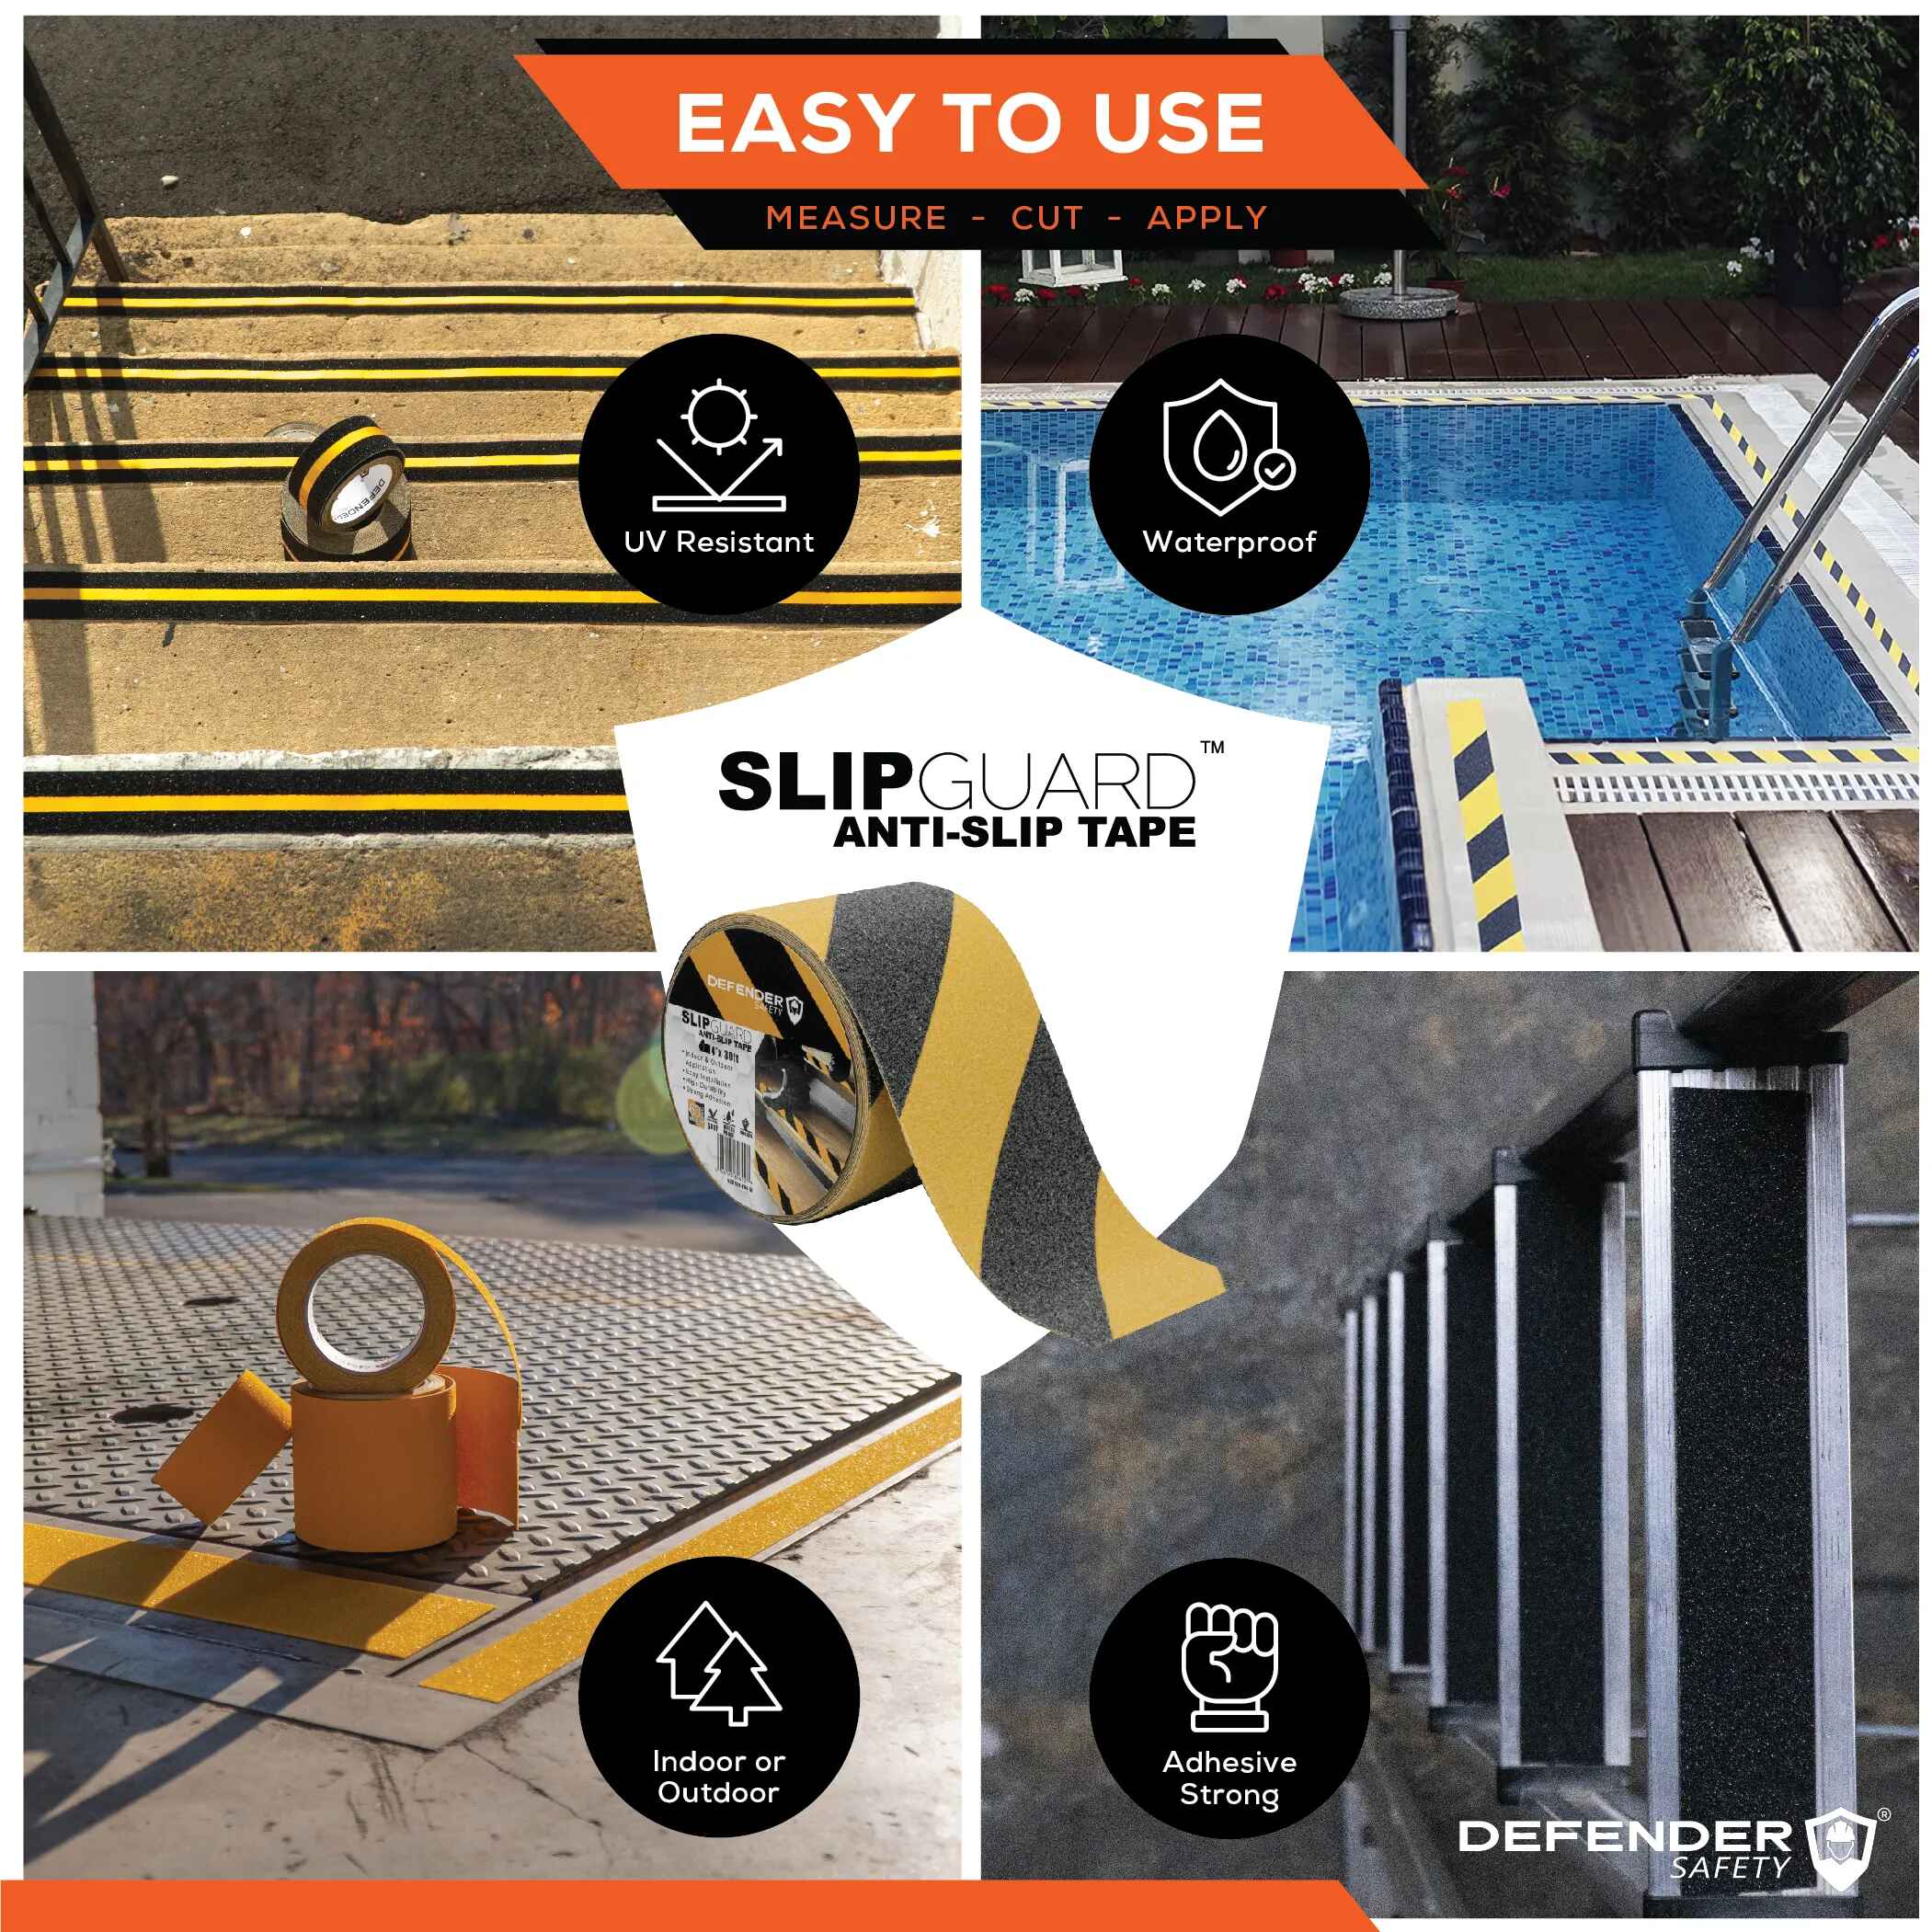 SLIPGUARD™ Anti-Slip Floor Tape. 60 Grit. Black w/ Yellow Stripe - Defender Safety